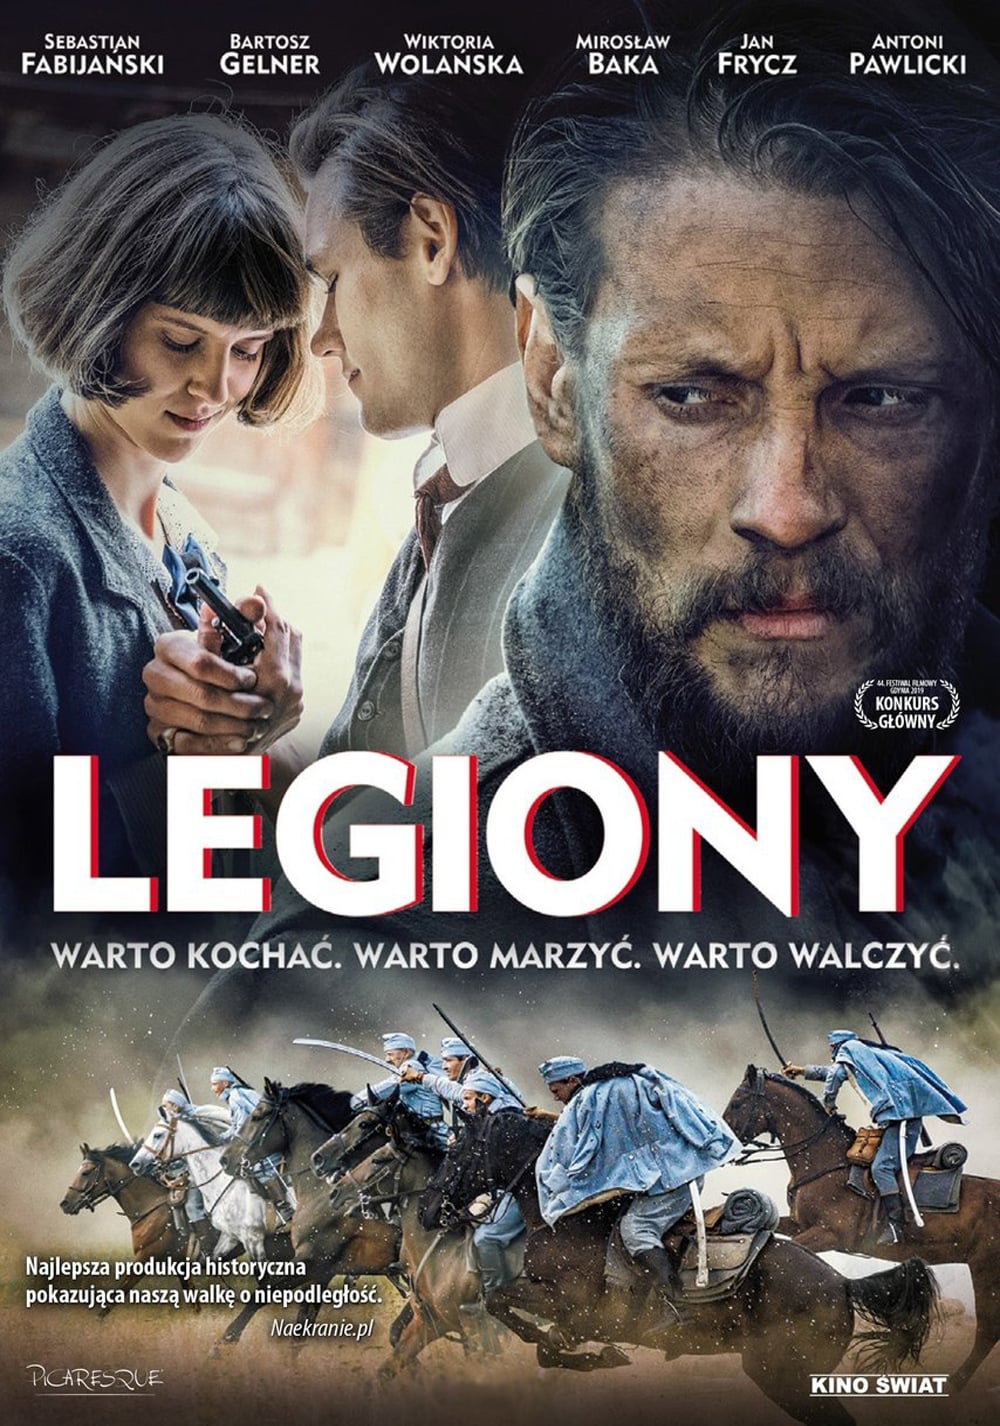 The Legions (2019) HD 1080p Latino